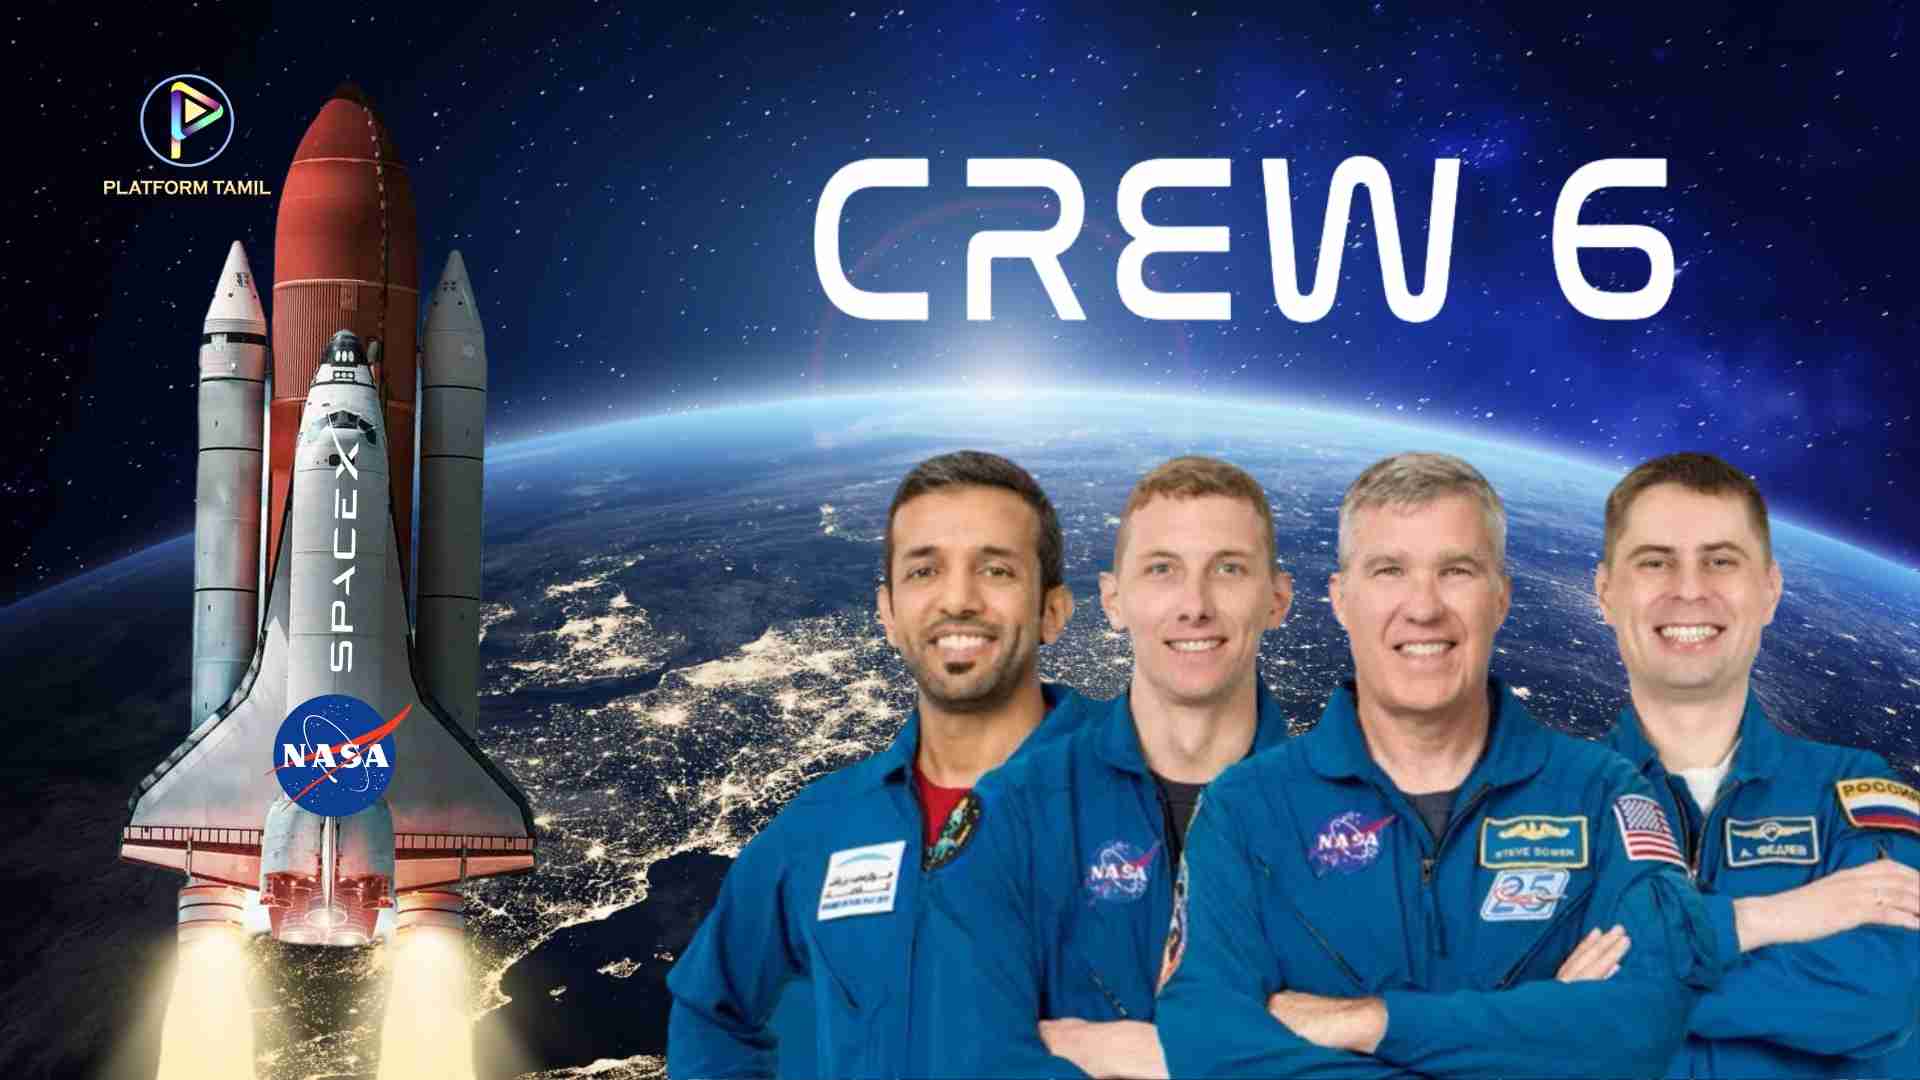 NASA - Spacex Crew-6 - Platform Tamil